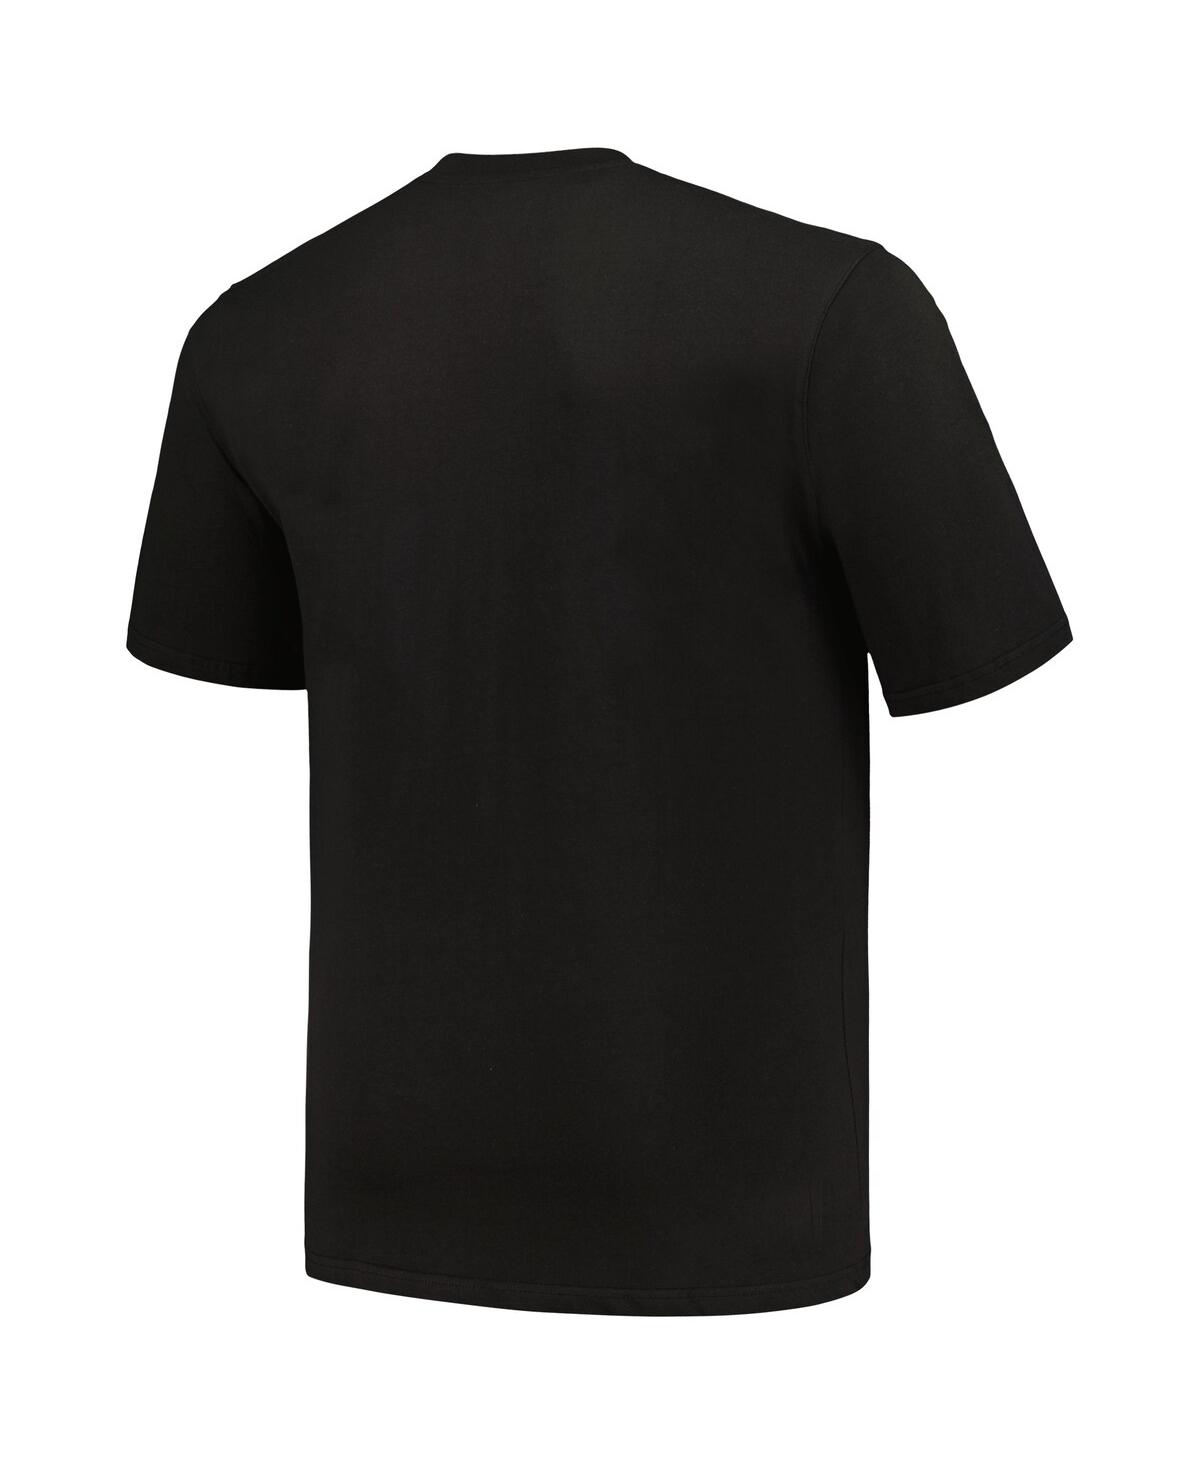 Detroit Tigers Profile Big & Tall T-Shirt Combo Pack - Black/Heather Gray